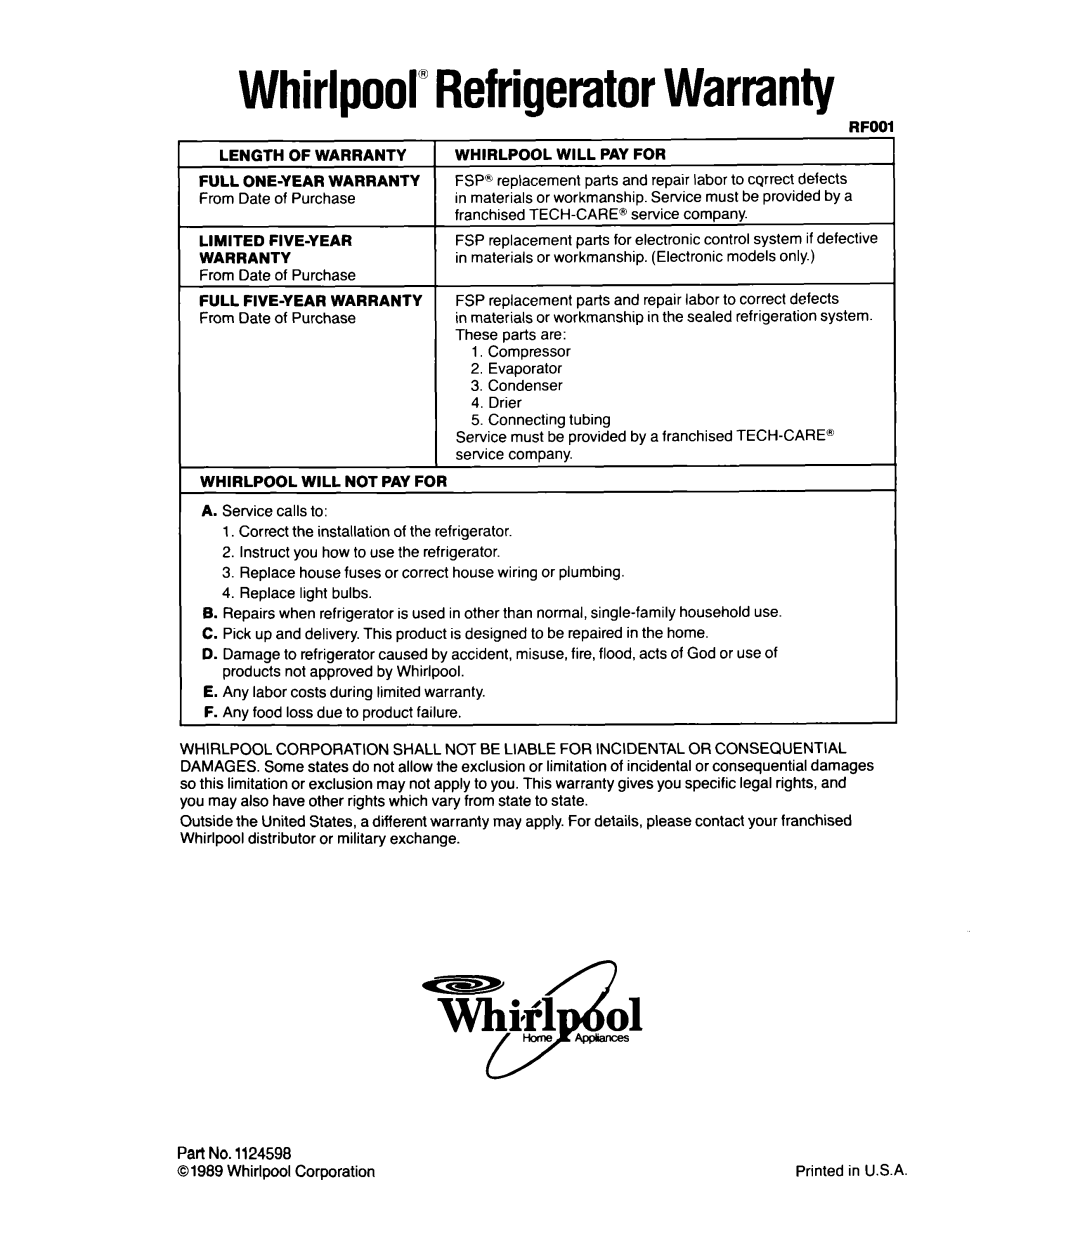 Whirlpool ETl4CC manual Whirlpool”RefrigeratorWarranty, Part No 